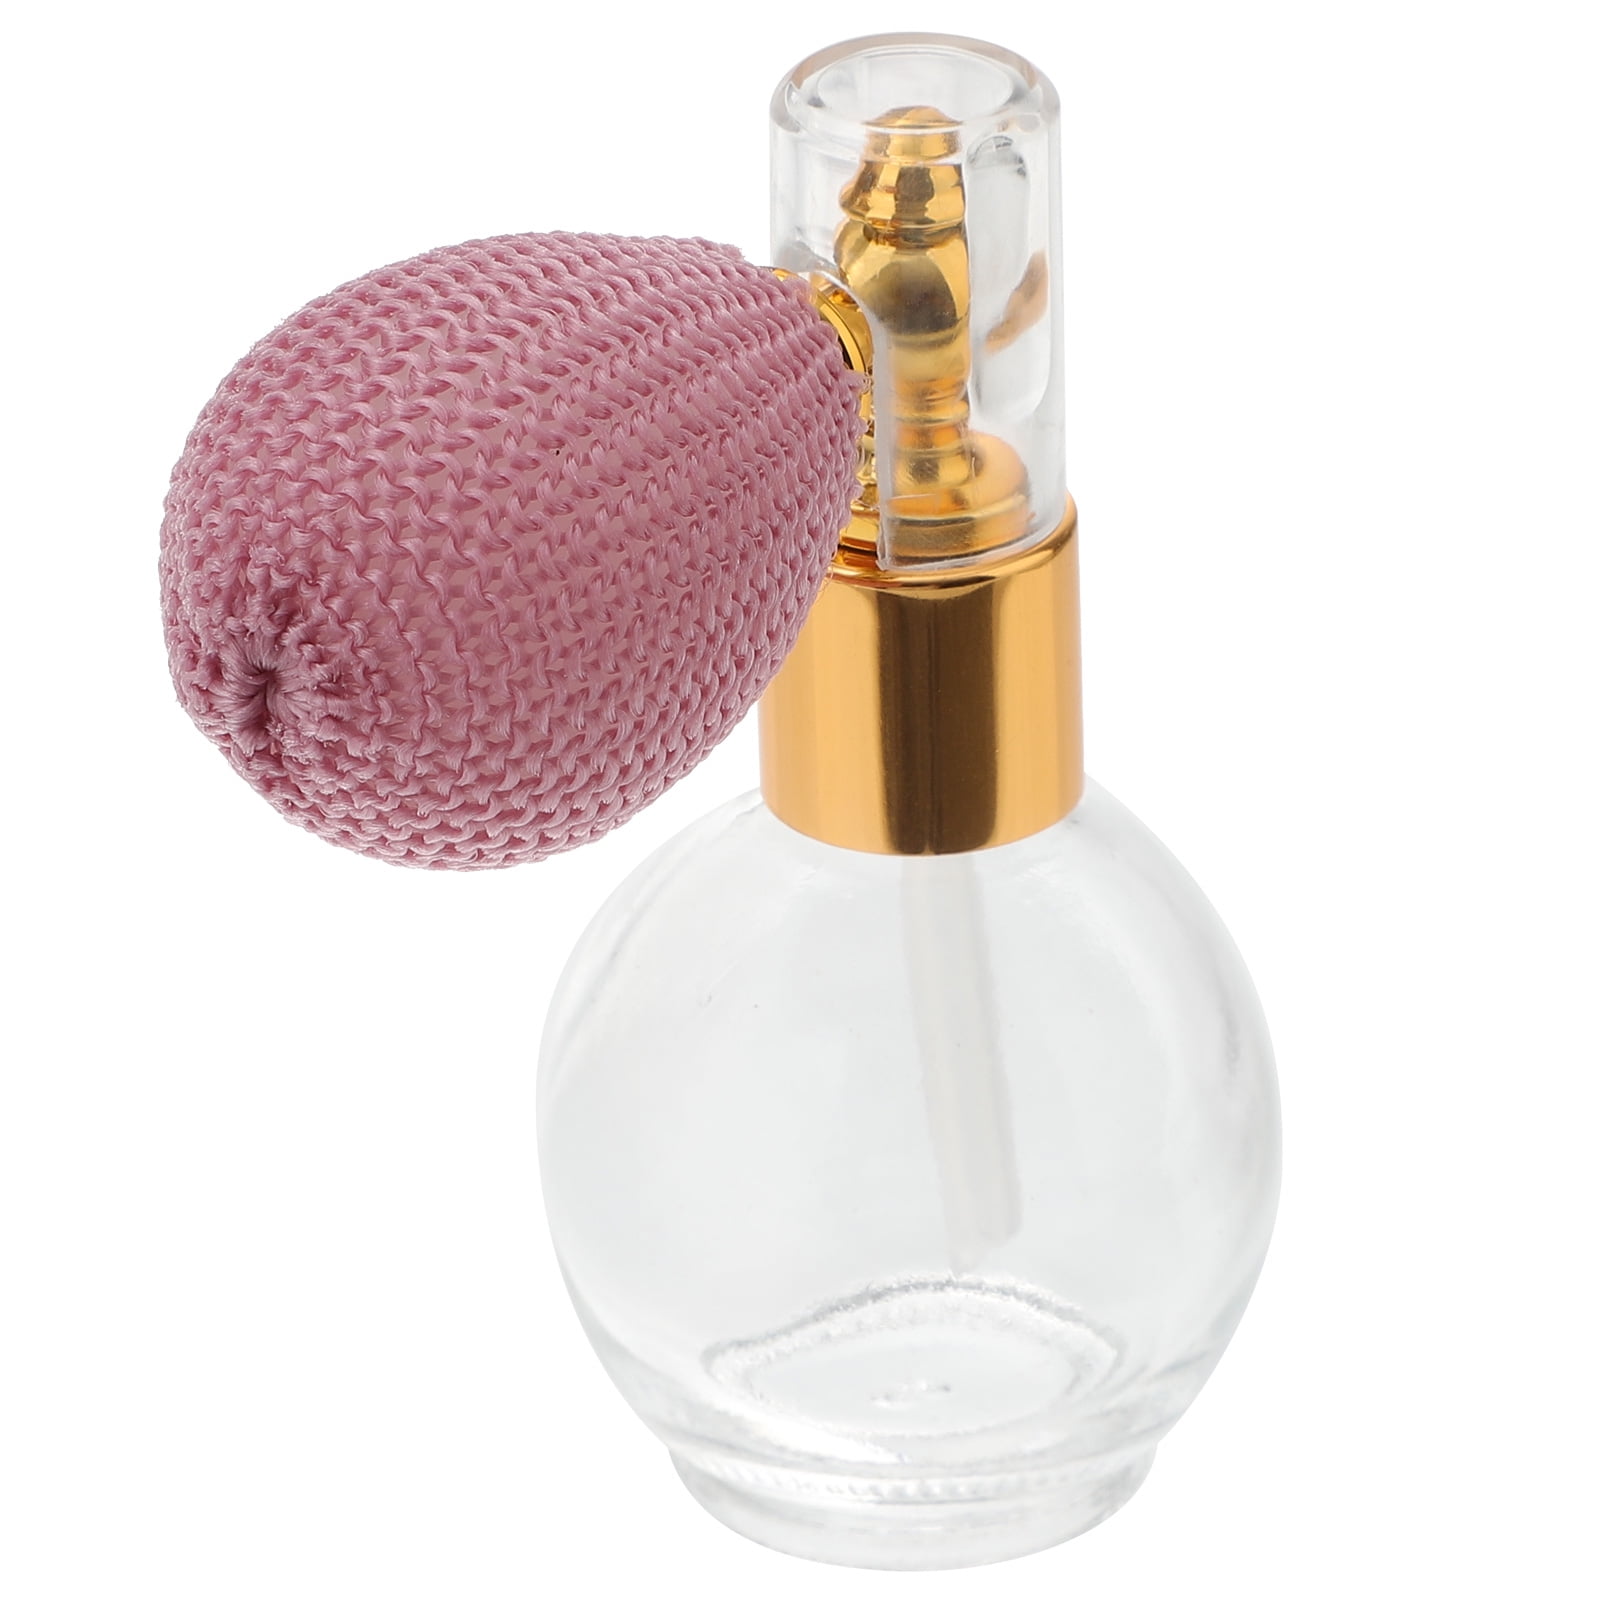 Lil Ray 10ml Perfume Atomizer for Men & Women. Refillable Glass